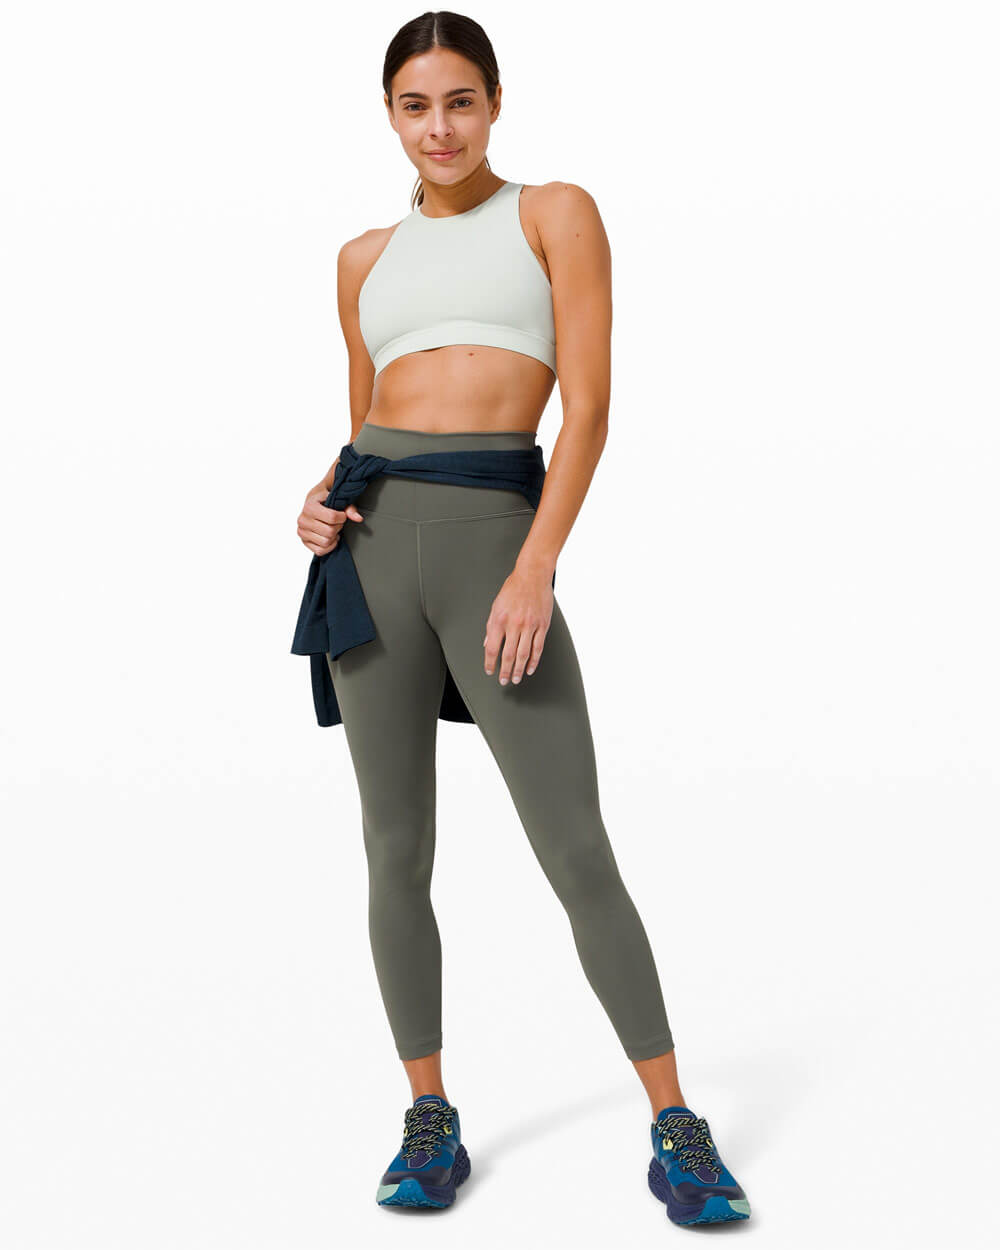 IVYSANTI Womens Yoga Pant,Full-Length Workout Pants Squat Proof Running Leggings